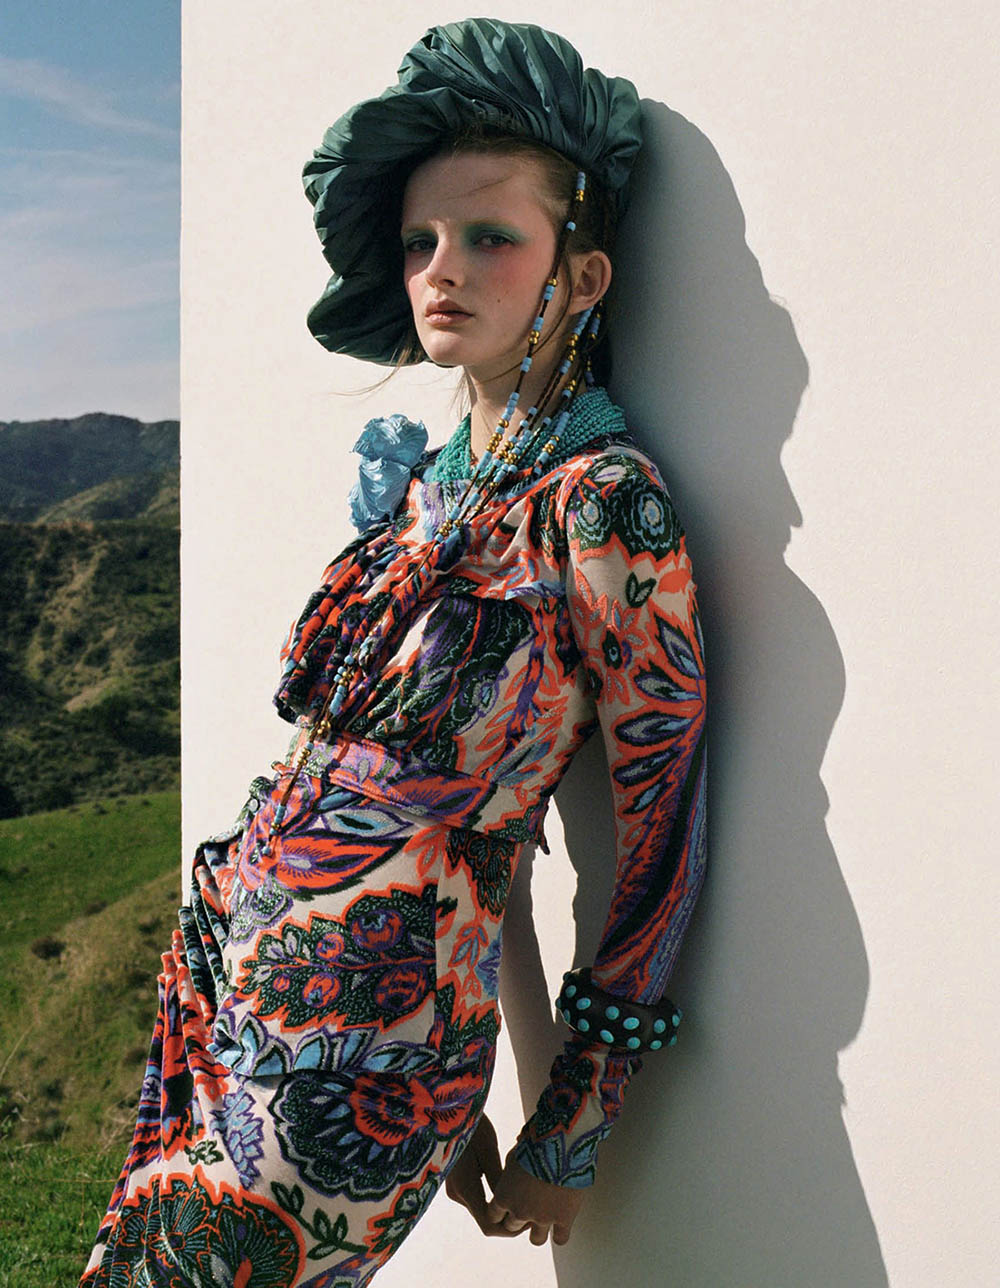 Primrose Archer by Mel Bles for Vogue China June 2020